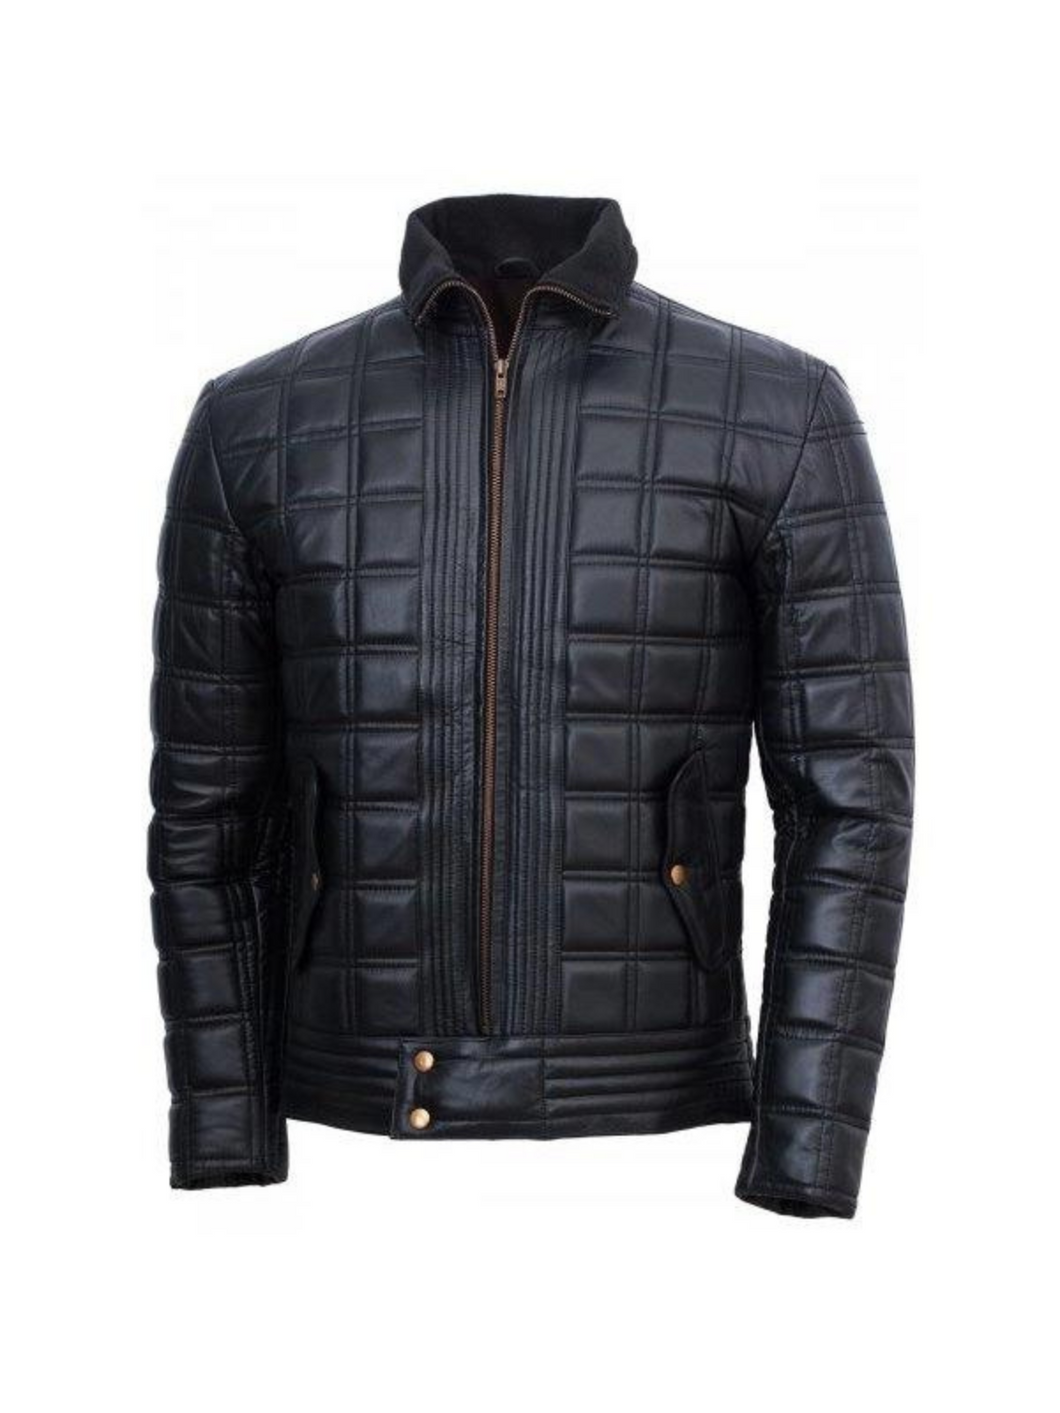 Men’s Trimmed Black Quilted Leather Jacket